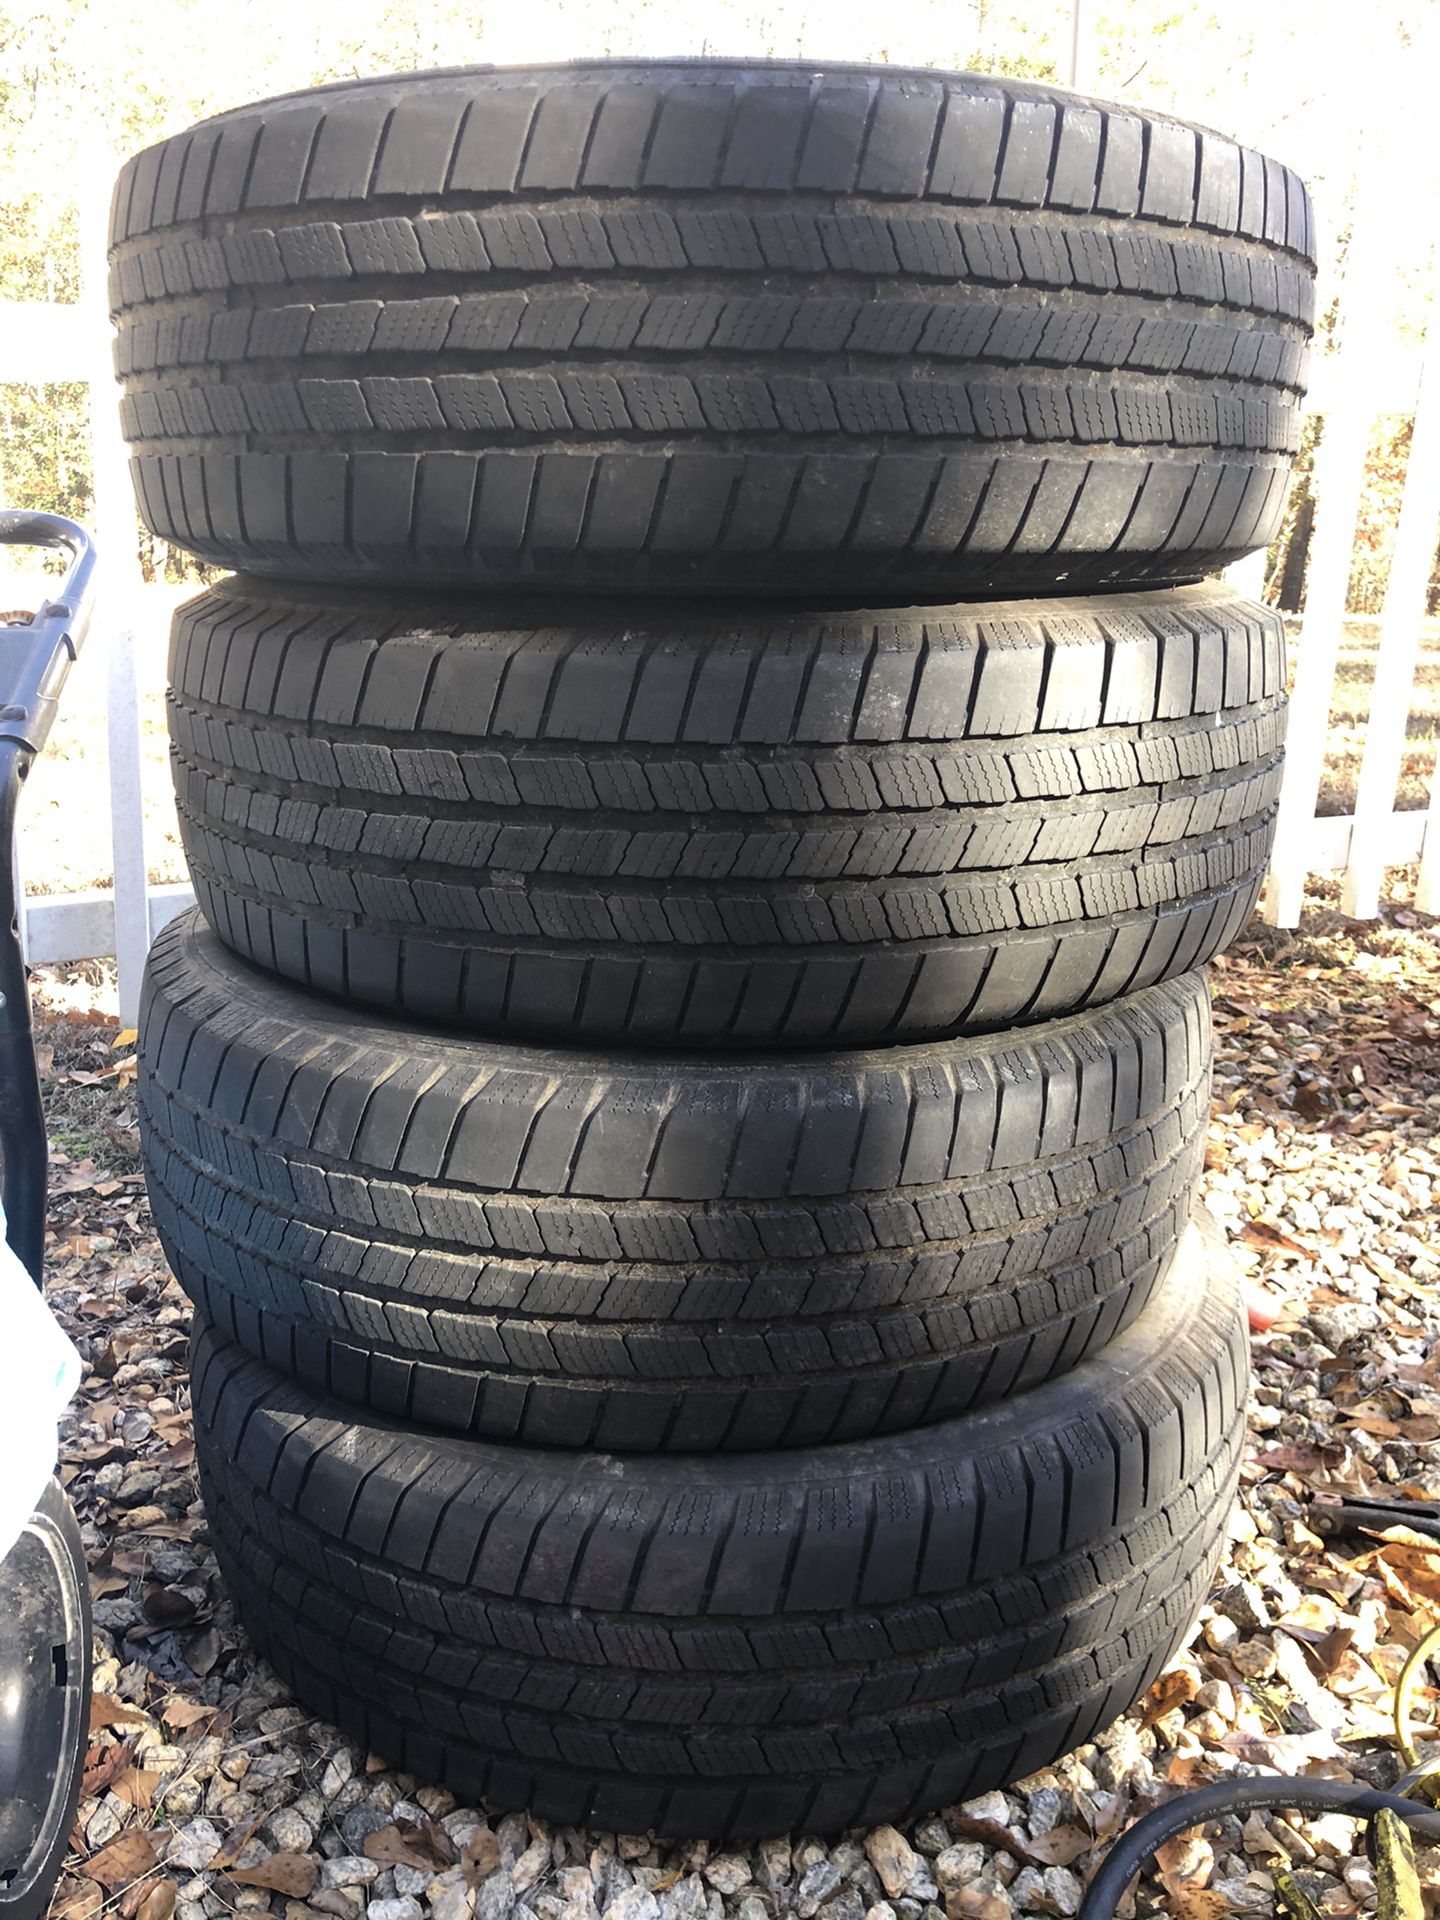 MICHELIN 10 ply LT245/75R16 M&S tires still have half tread . Four tires $100 still have more than half of tread wear left